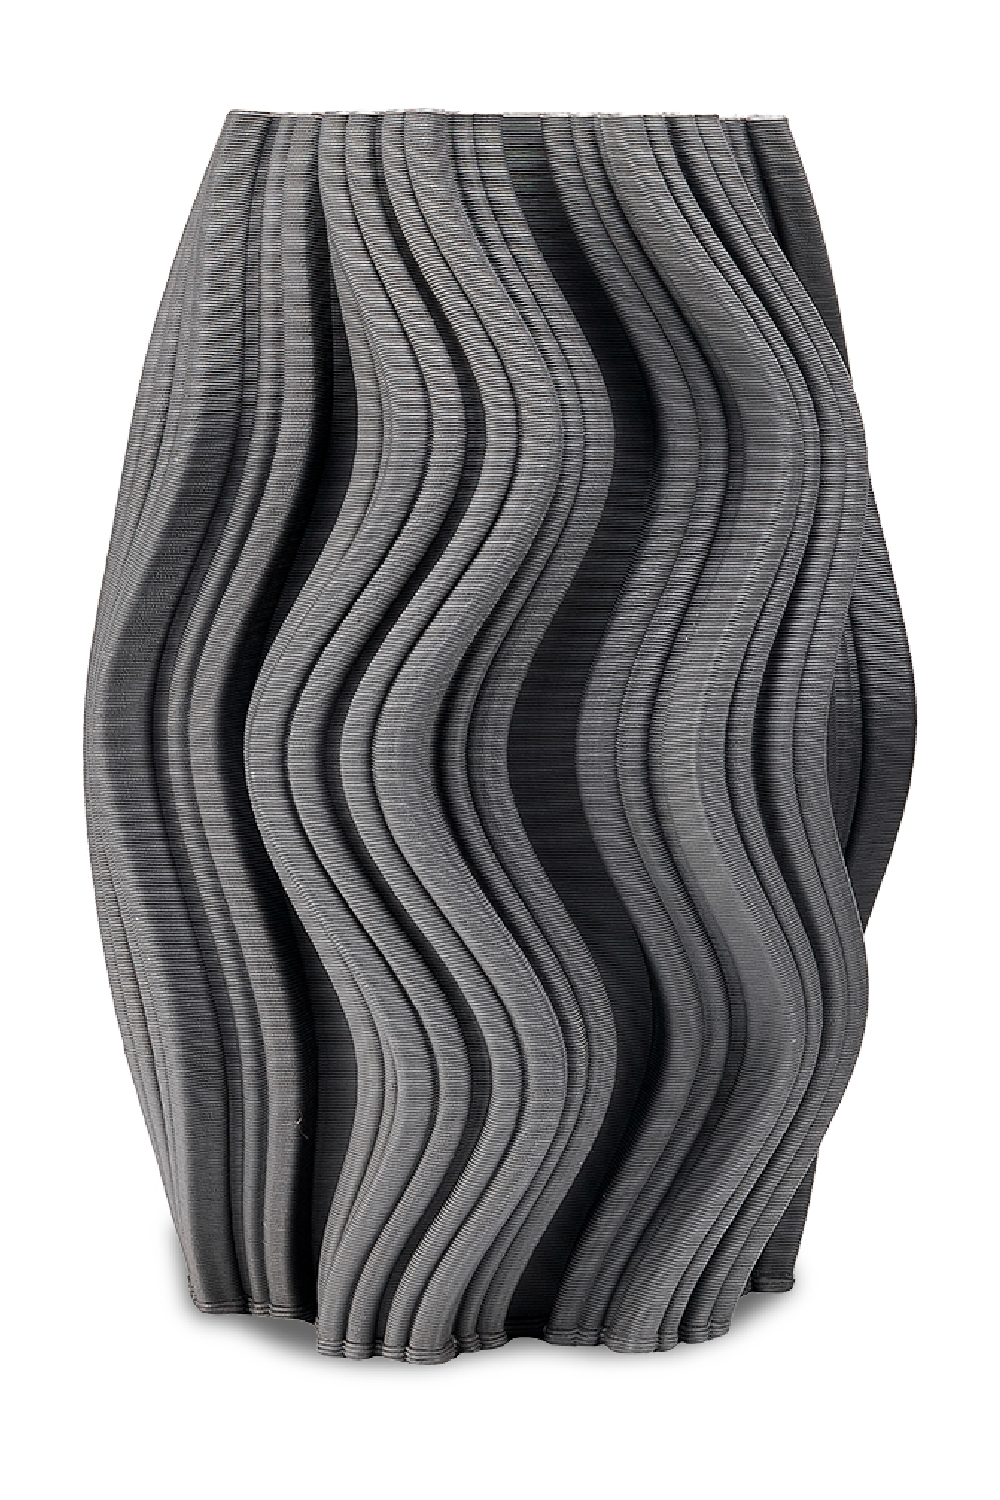 Gray Textural Ceramic Vase | Liang & Eimil Anthra | Oroa.com